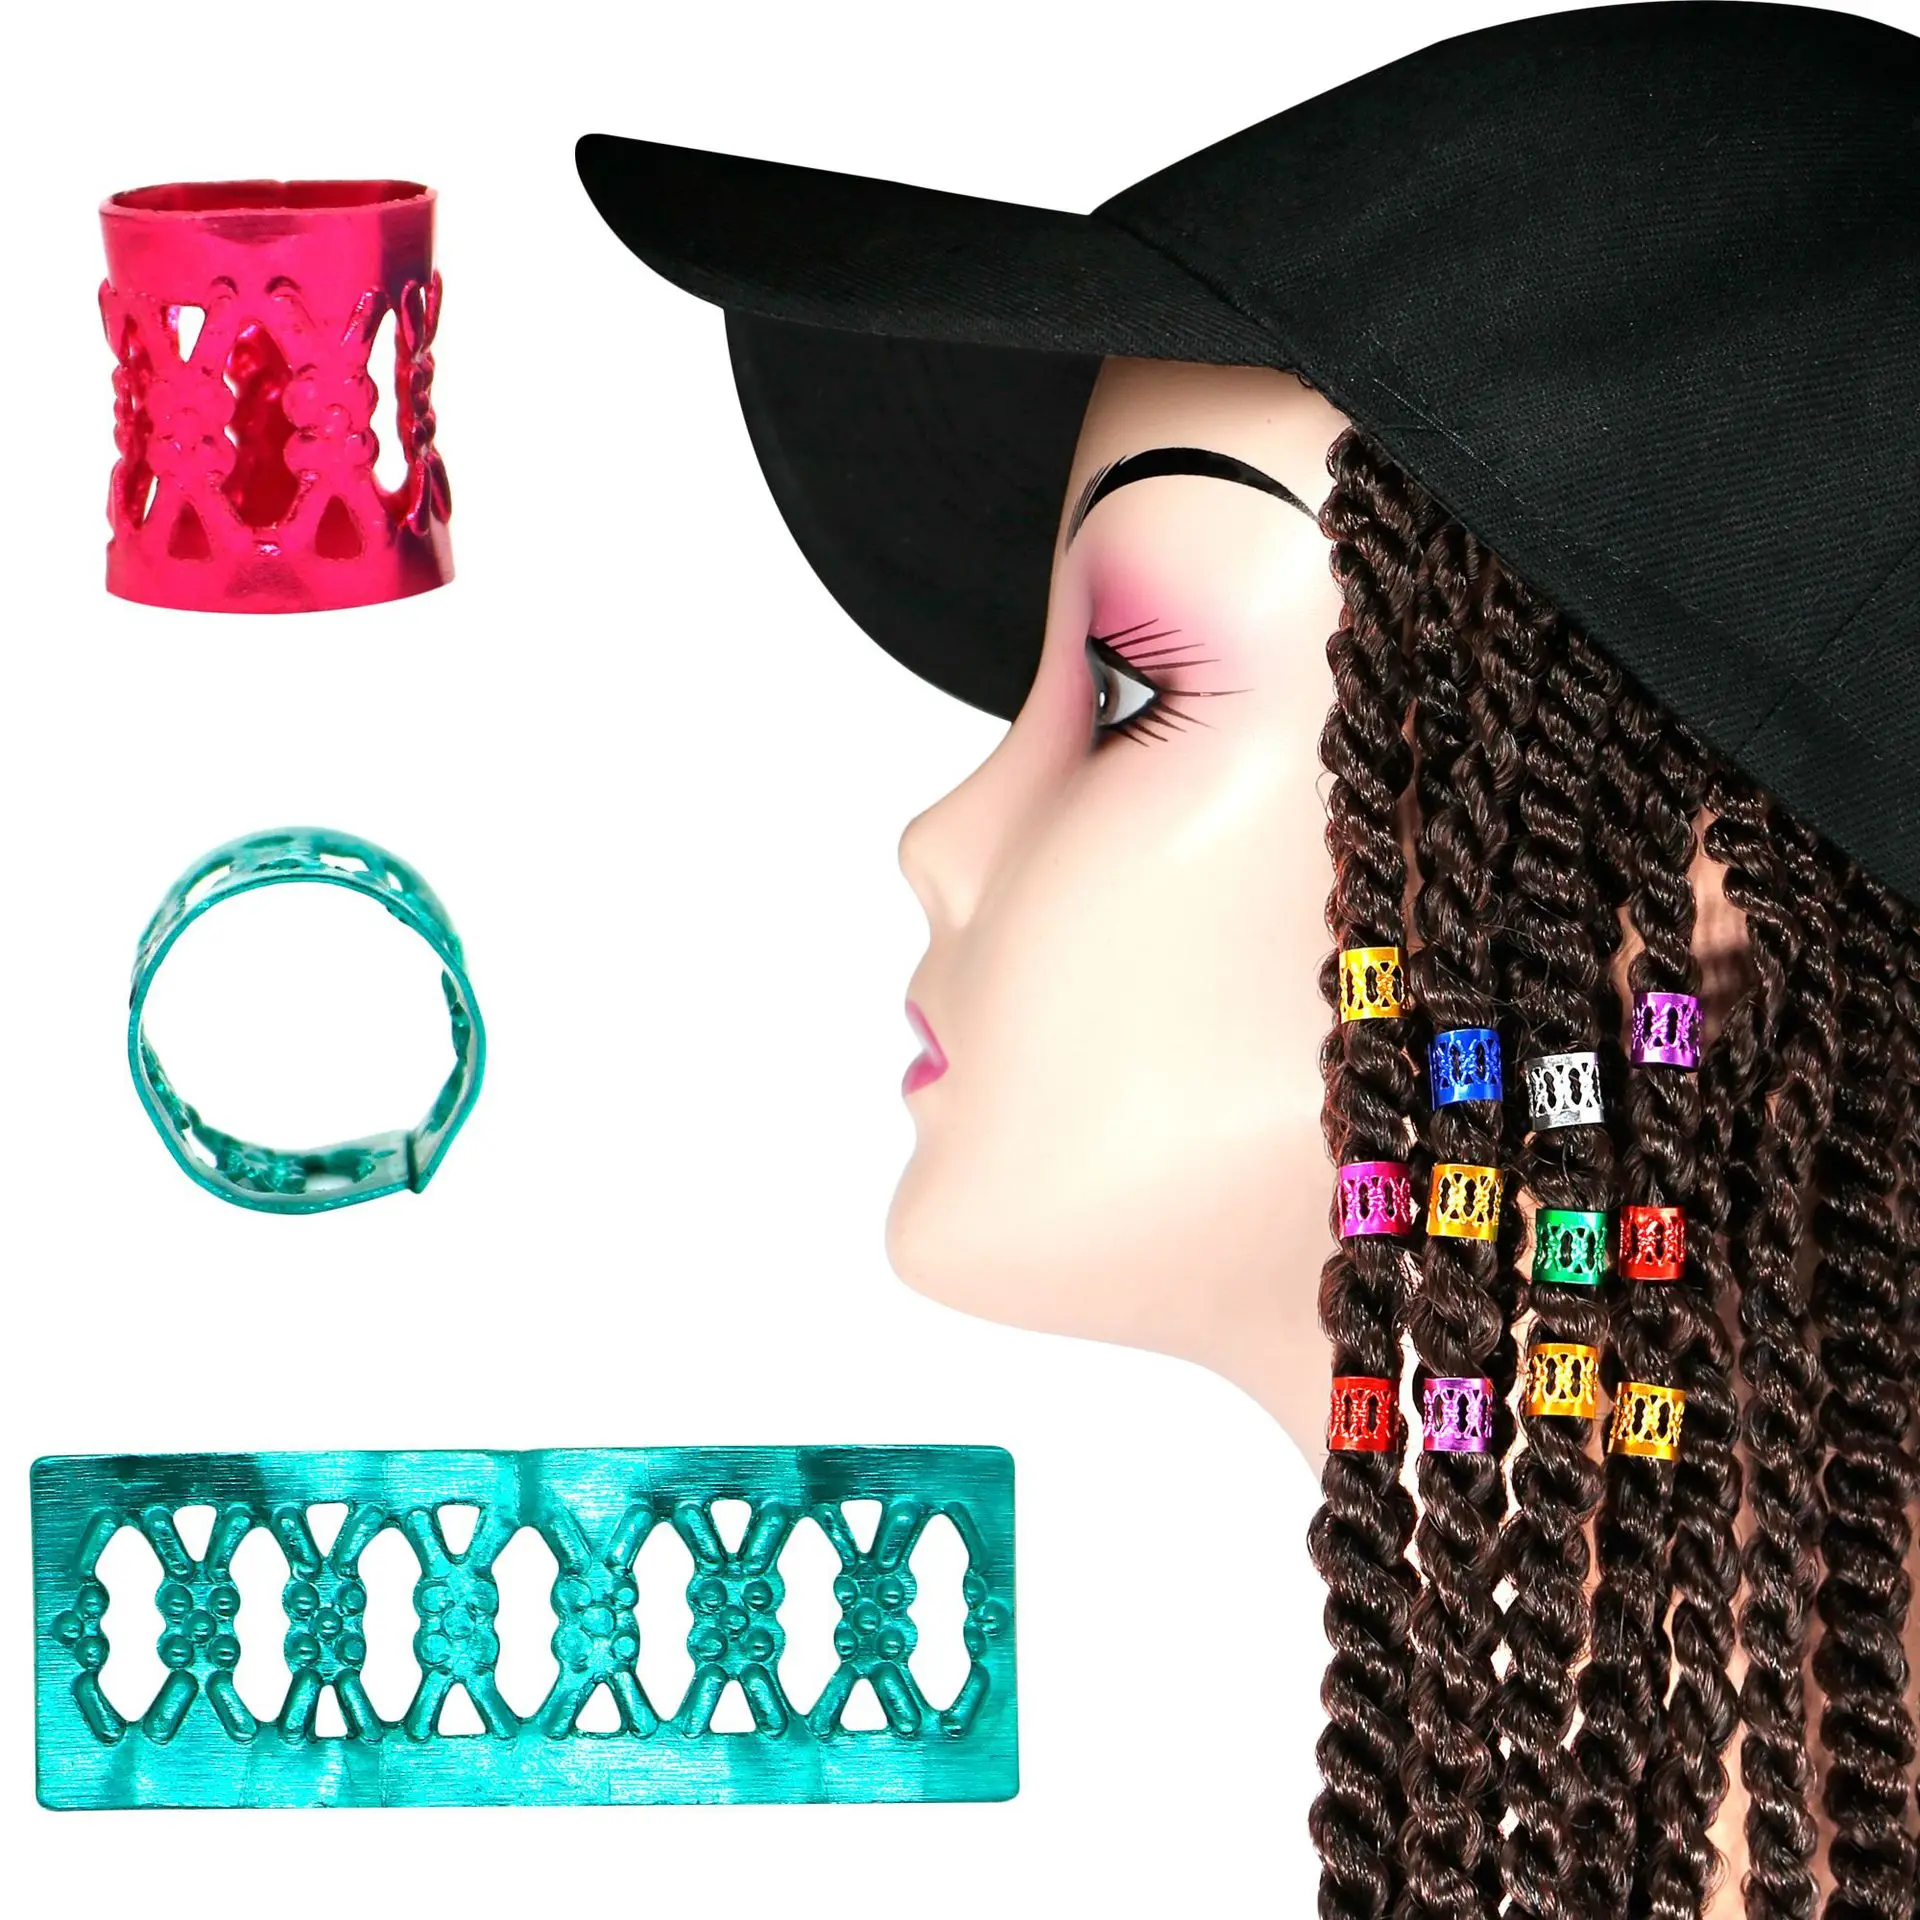 

Mixed Color Hair Braid Cuff African Hair Rings Beads Tubes 3D Charms Dreadlock Dread Hair Braids Jewelry Decoration Accessories